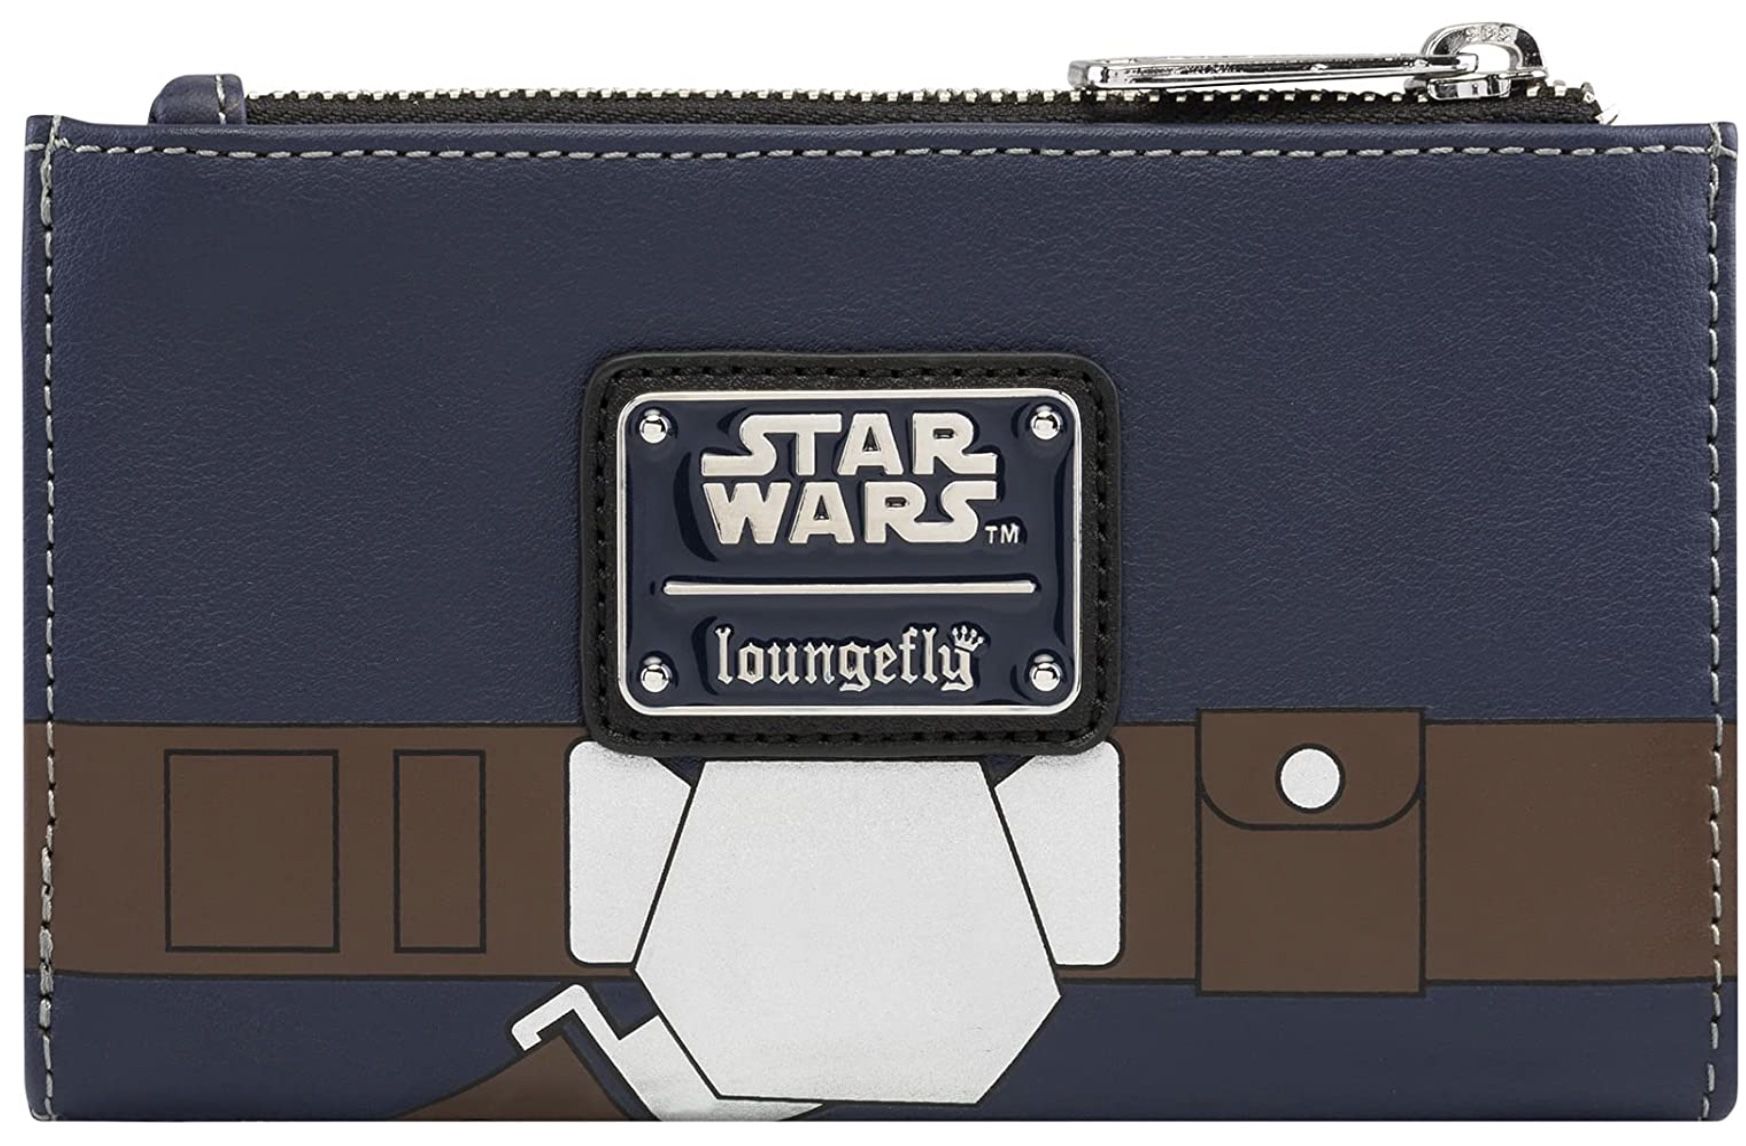 Funko Loungefly Star Wars   Han Solo Wallet für 15,58€ (statt 23€)   Prime